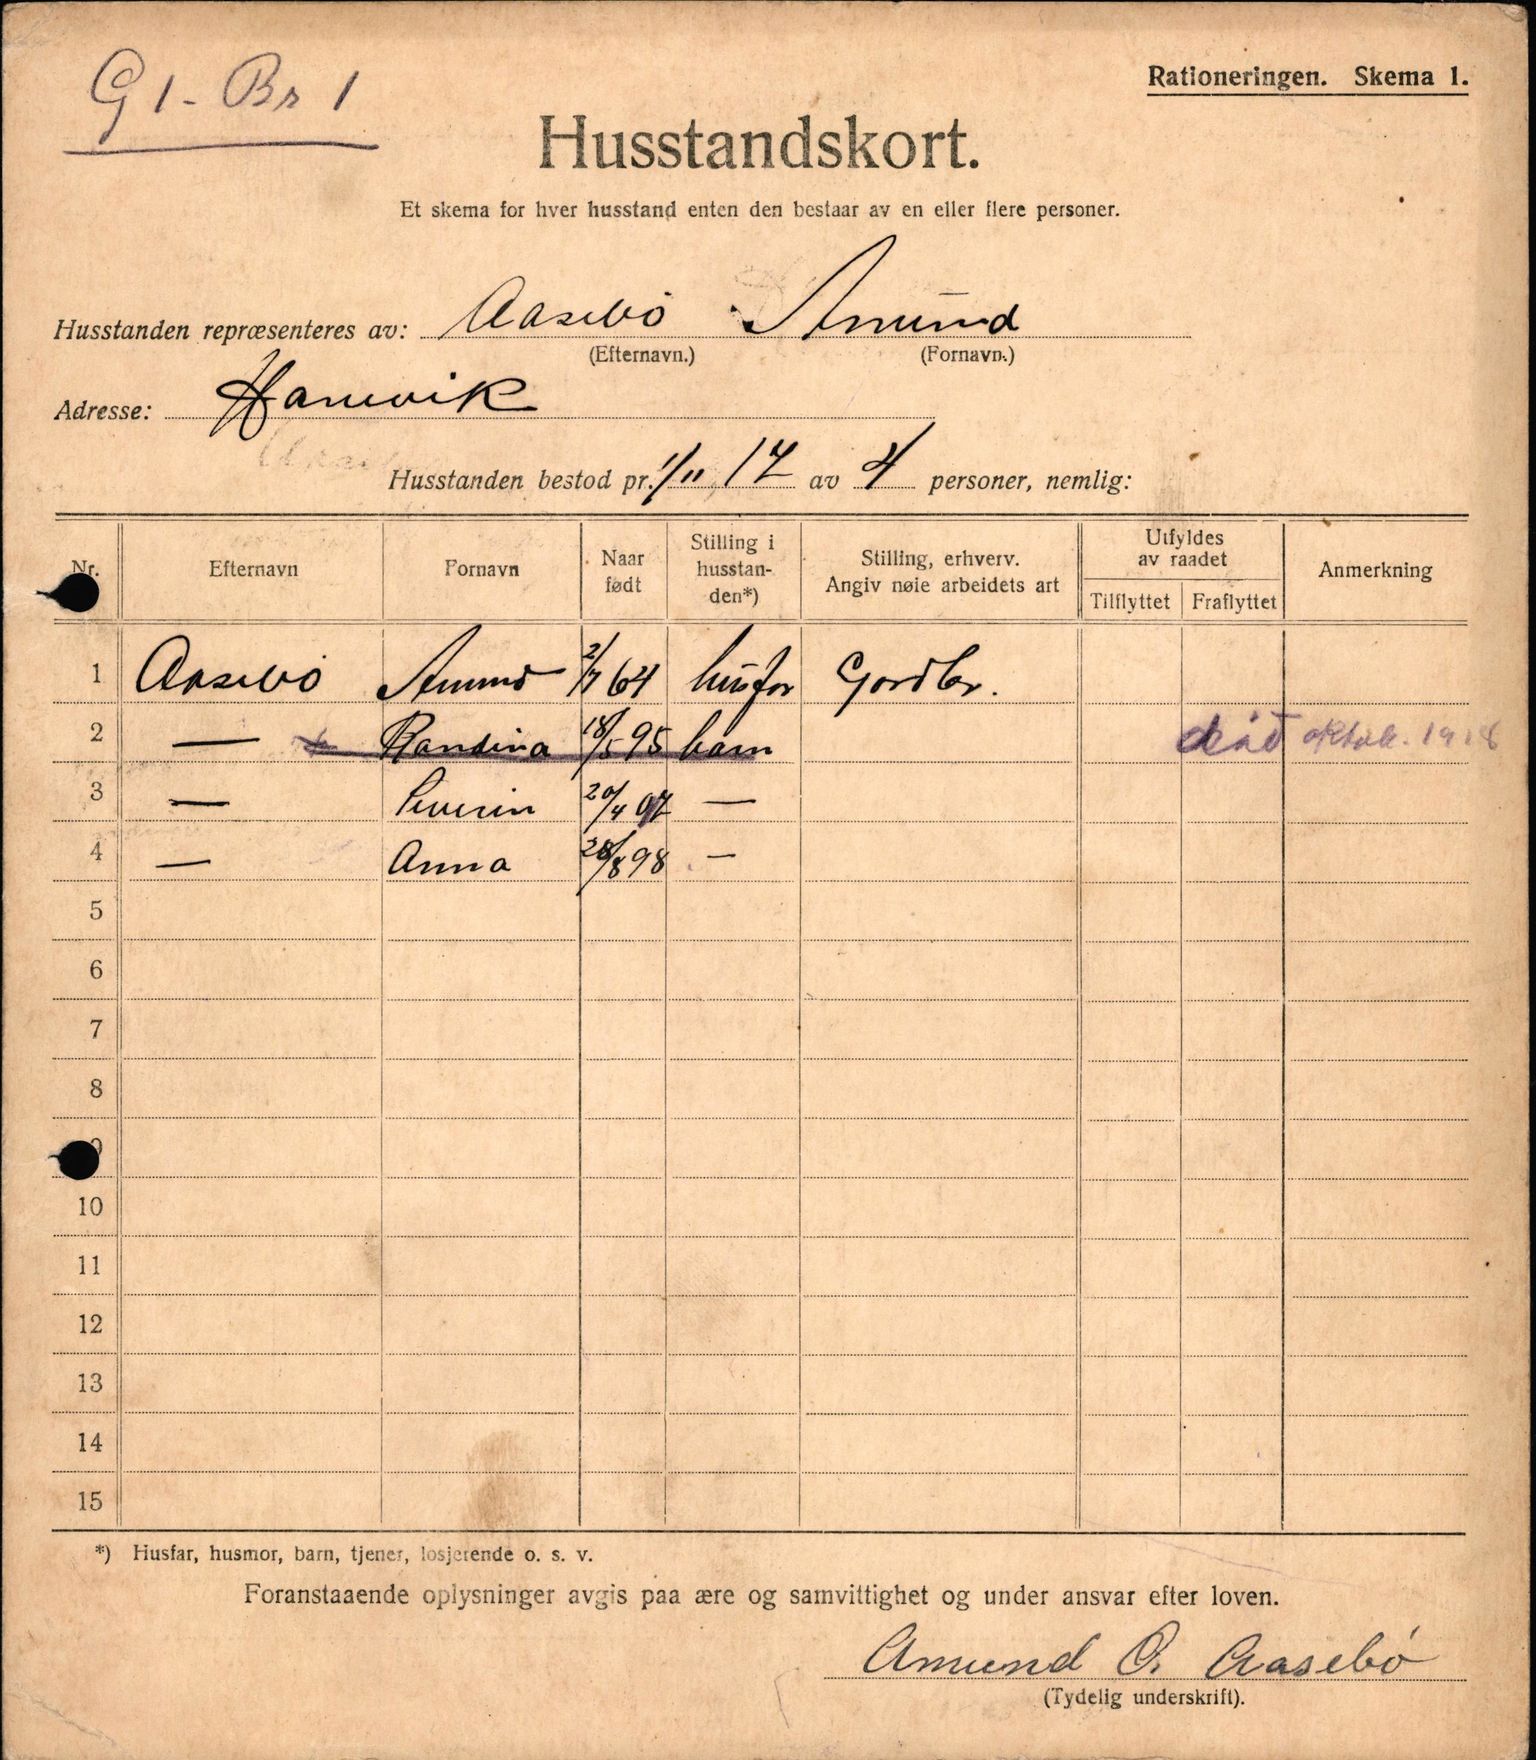 IKAH, Meland kommune, Provianteringsrådet, Husstander per 01.11.1917, 1917-1918, s. 1